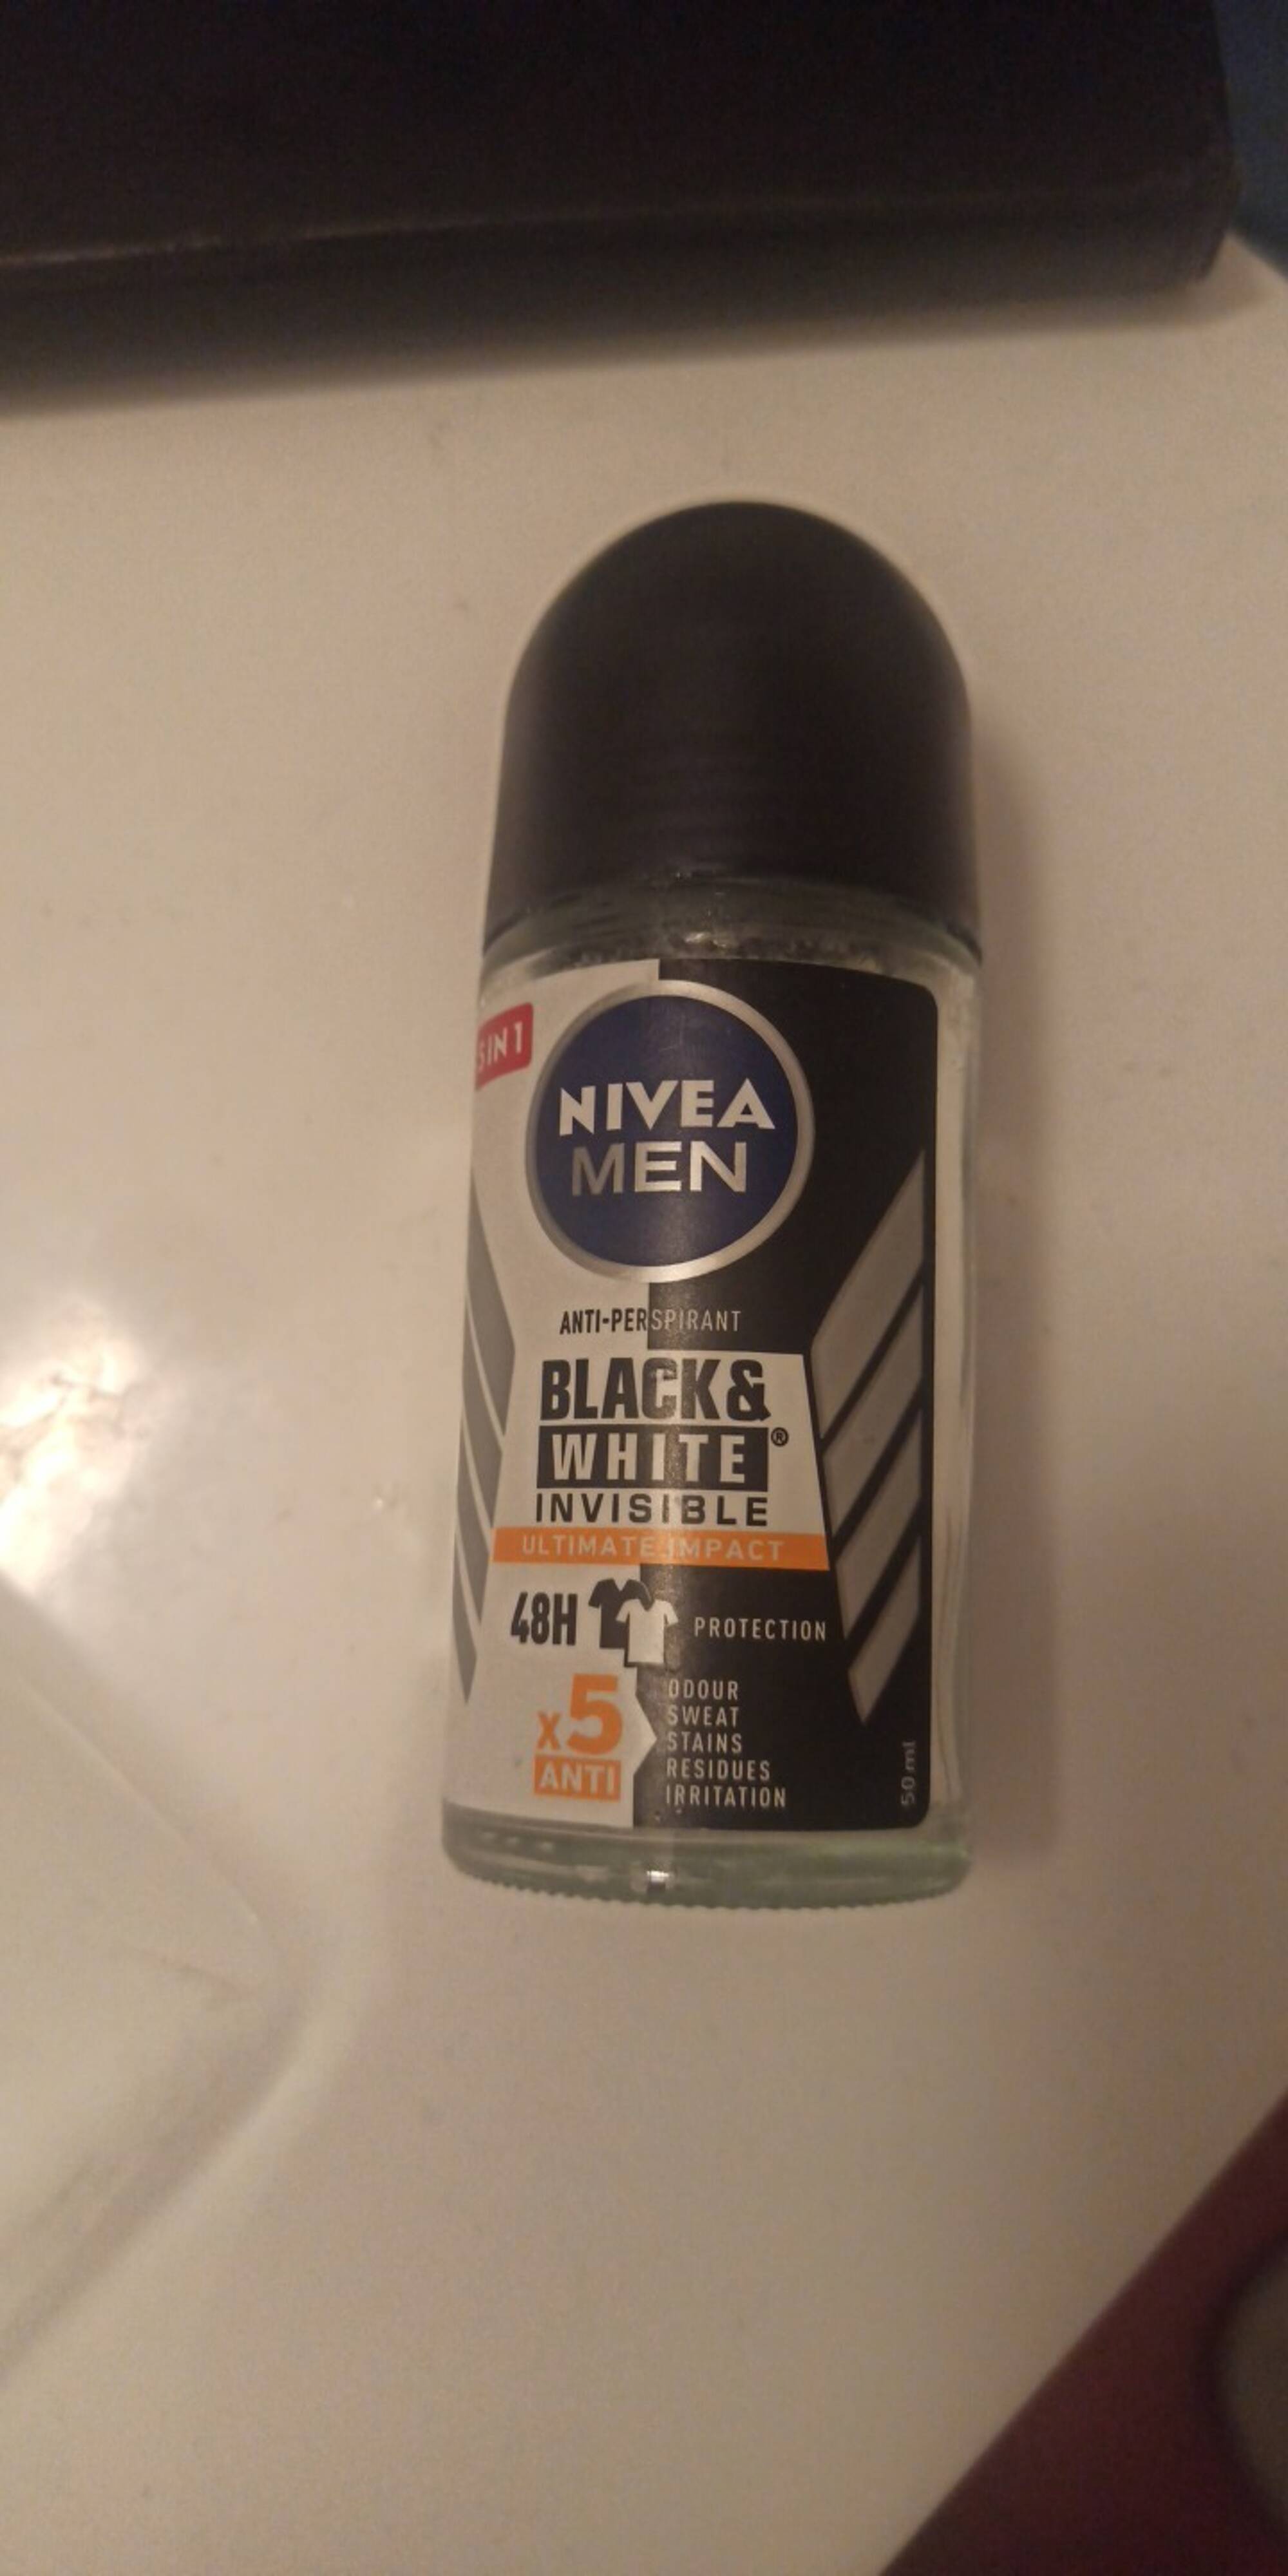 NIVEA MEN - Black & white invisible - anti-perspirant 48h